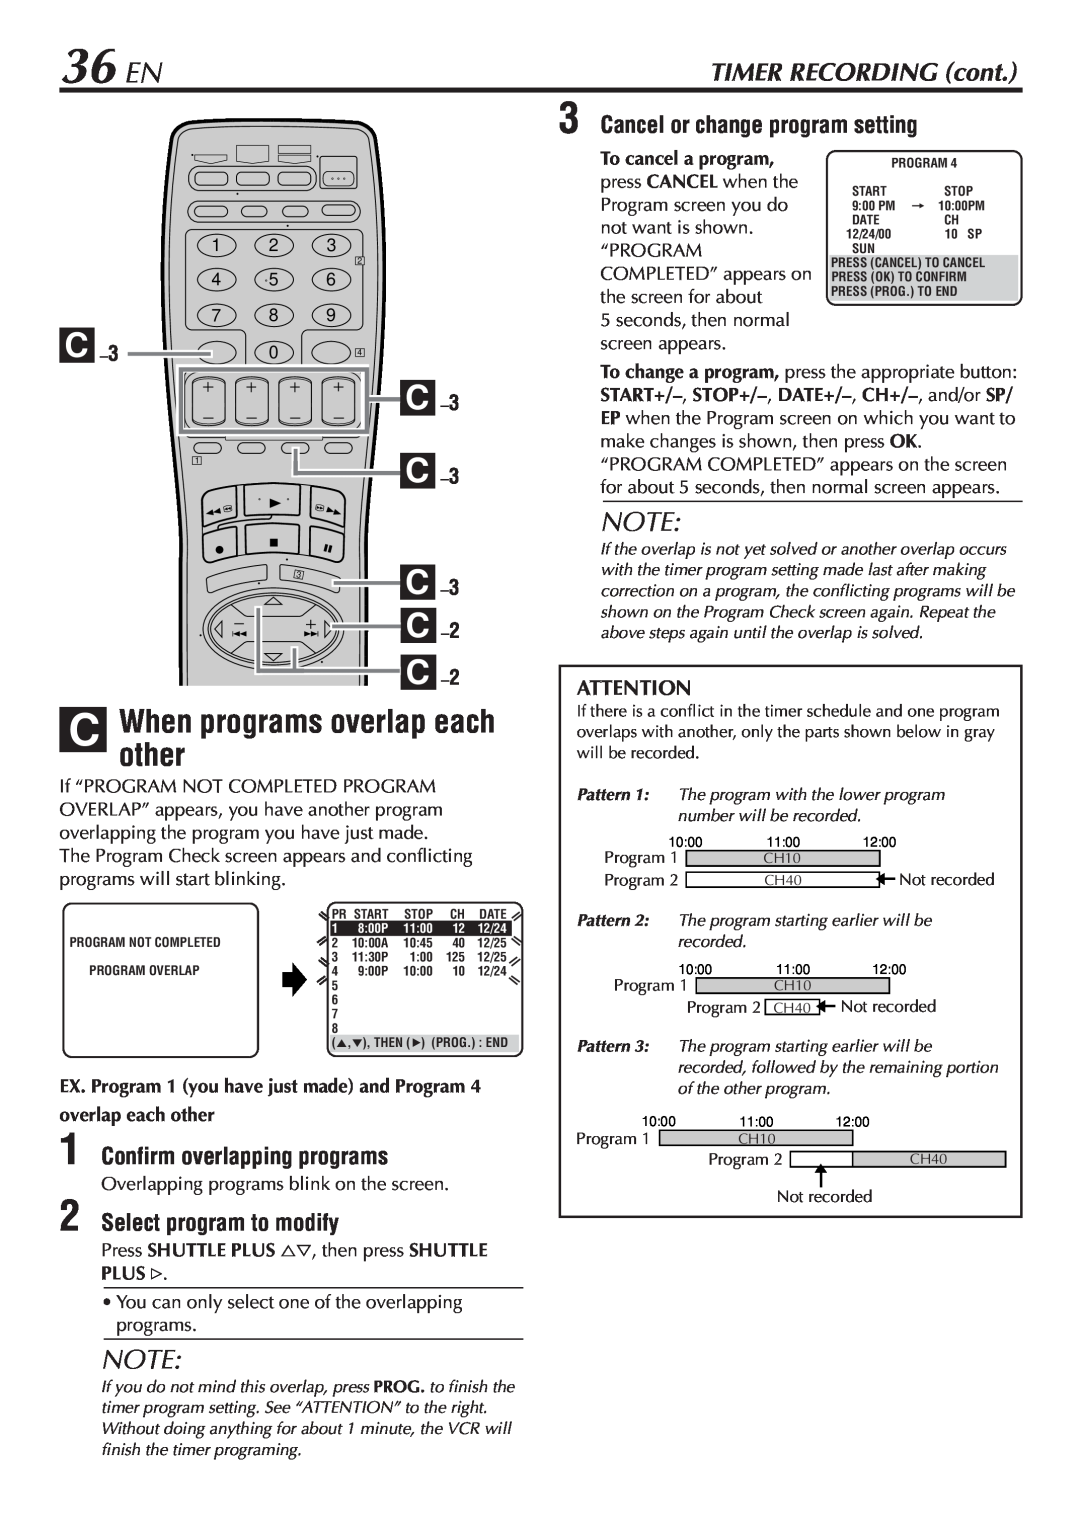 JVC SR-V10U manual 36 EN, C -3 C -2 C, C Whenother programs overlap each, Cancel or change program setting 